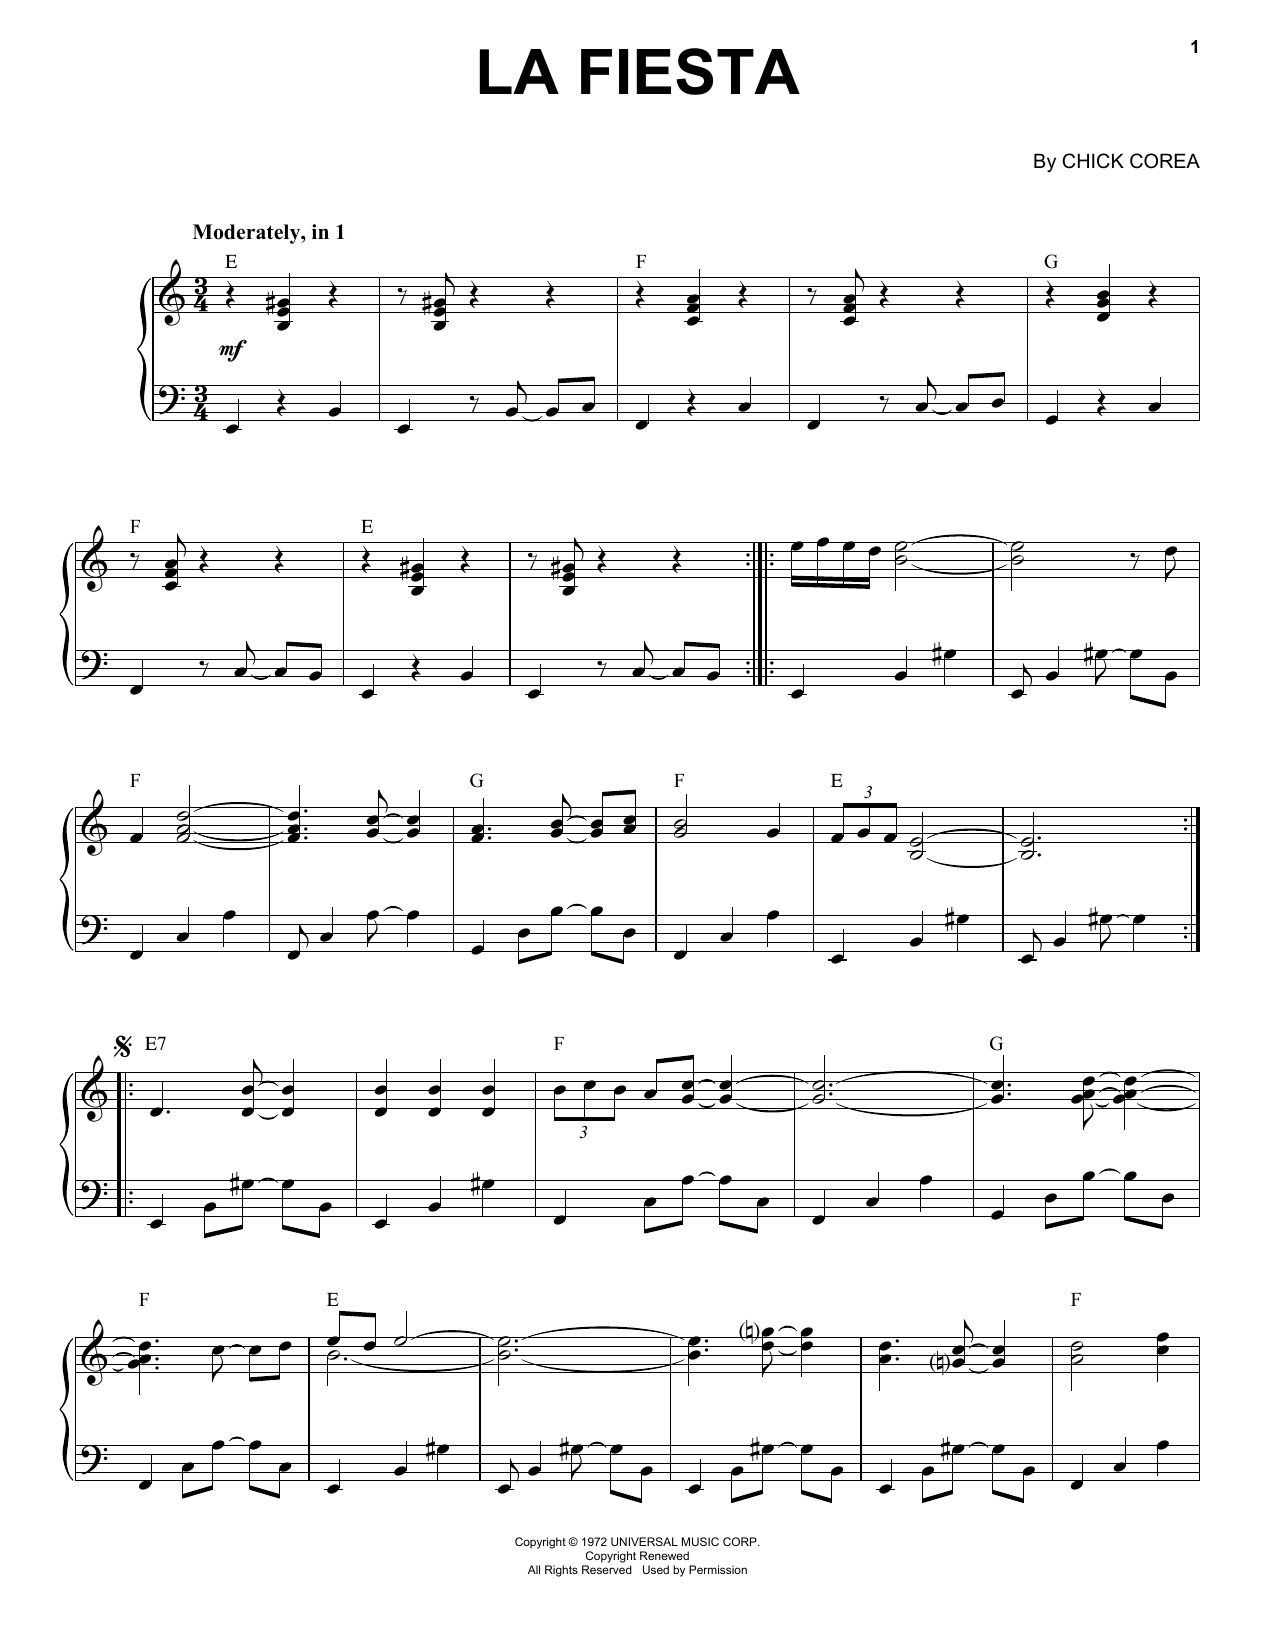 Chick Corea La Fiesta Sheet Music Notes & Chords for Piano Solo - Download or Print PDF